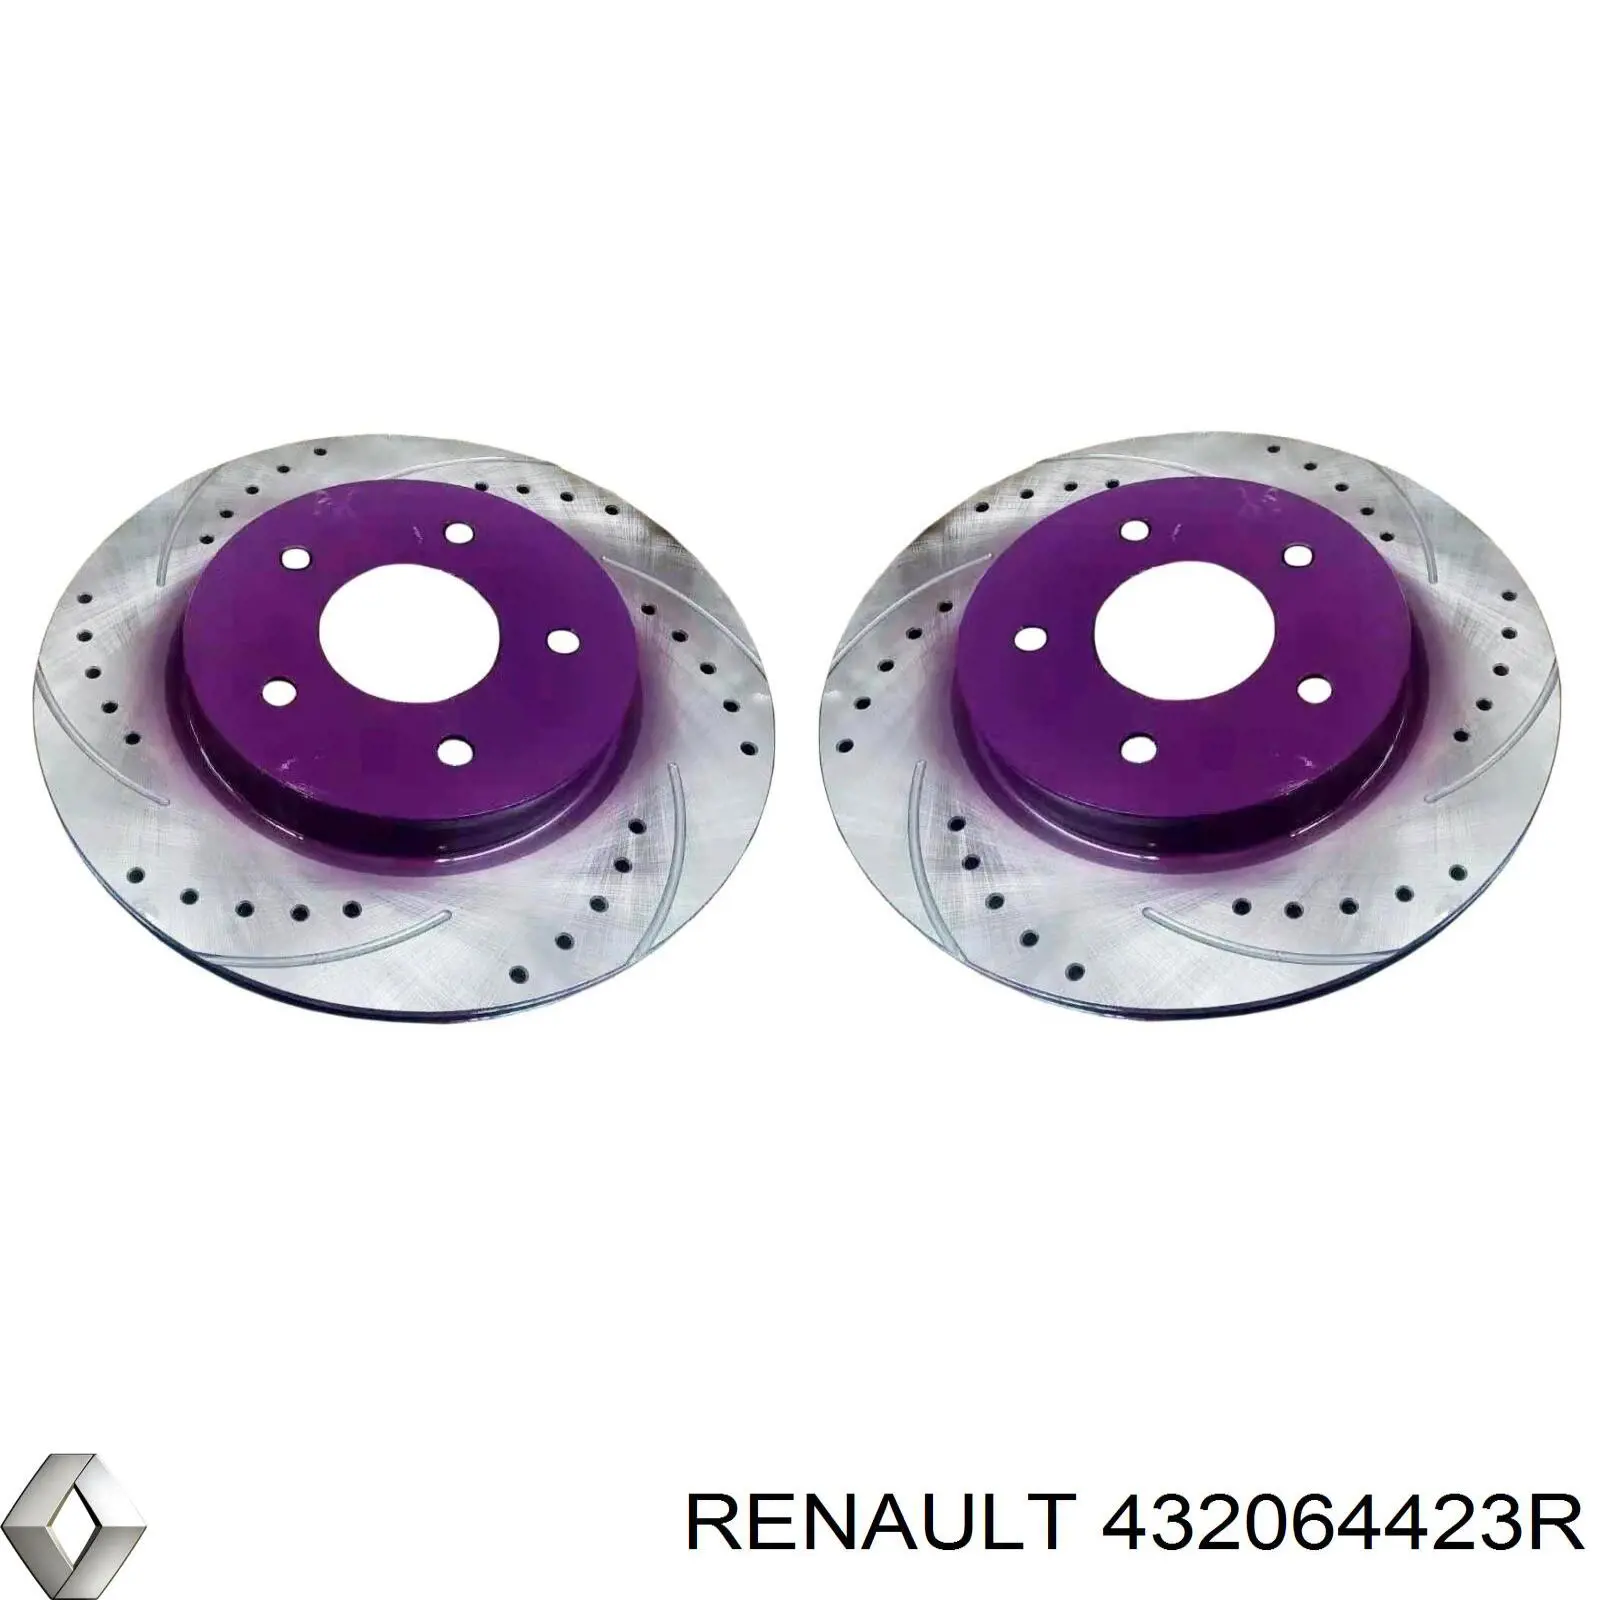 432064423R Renault (RVI) disco do freio traseiro